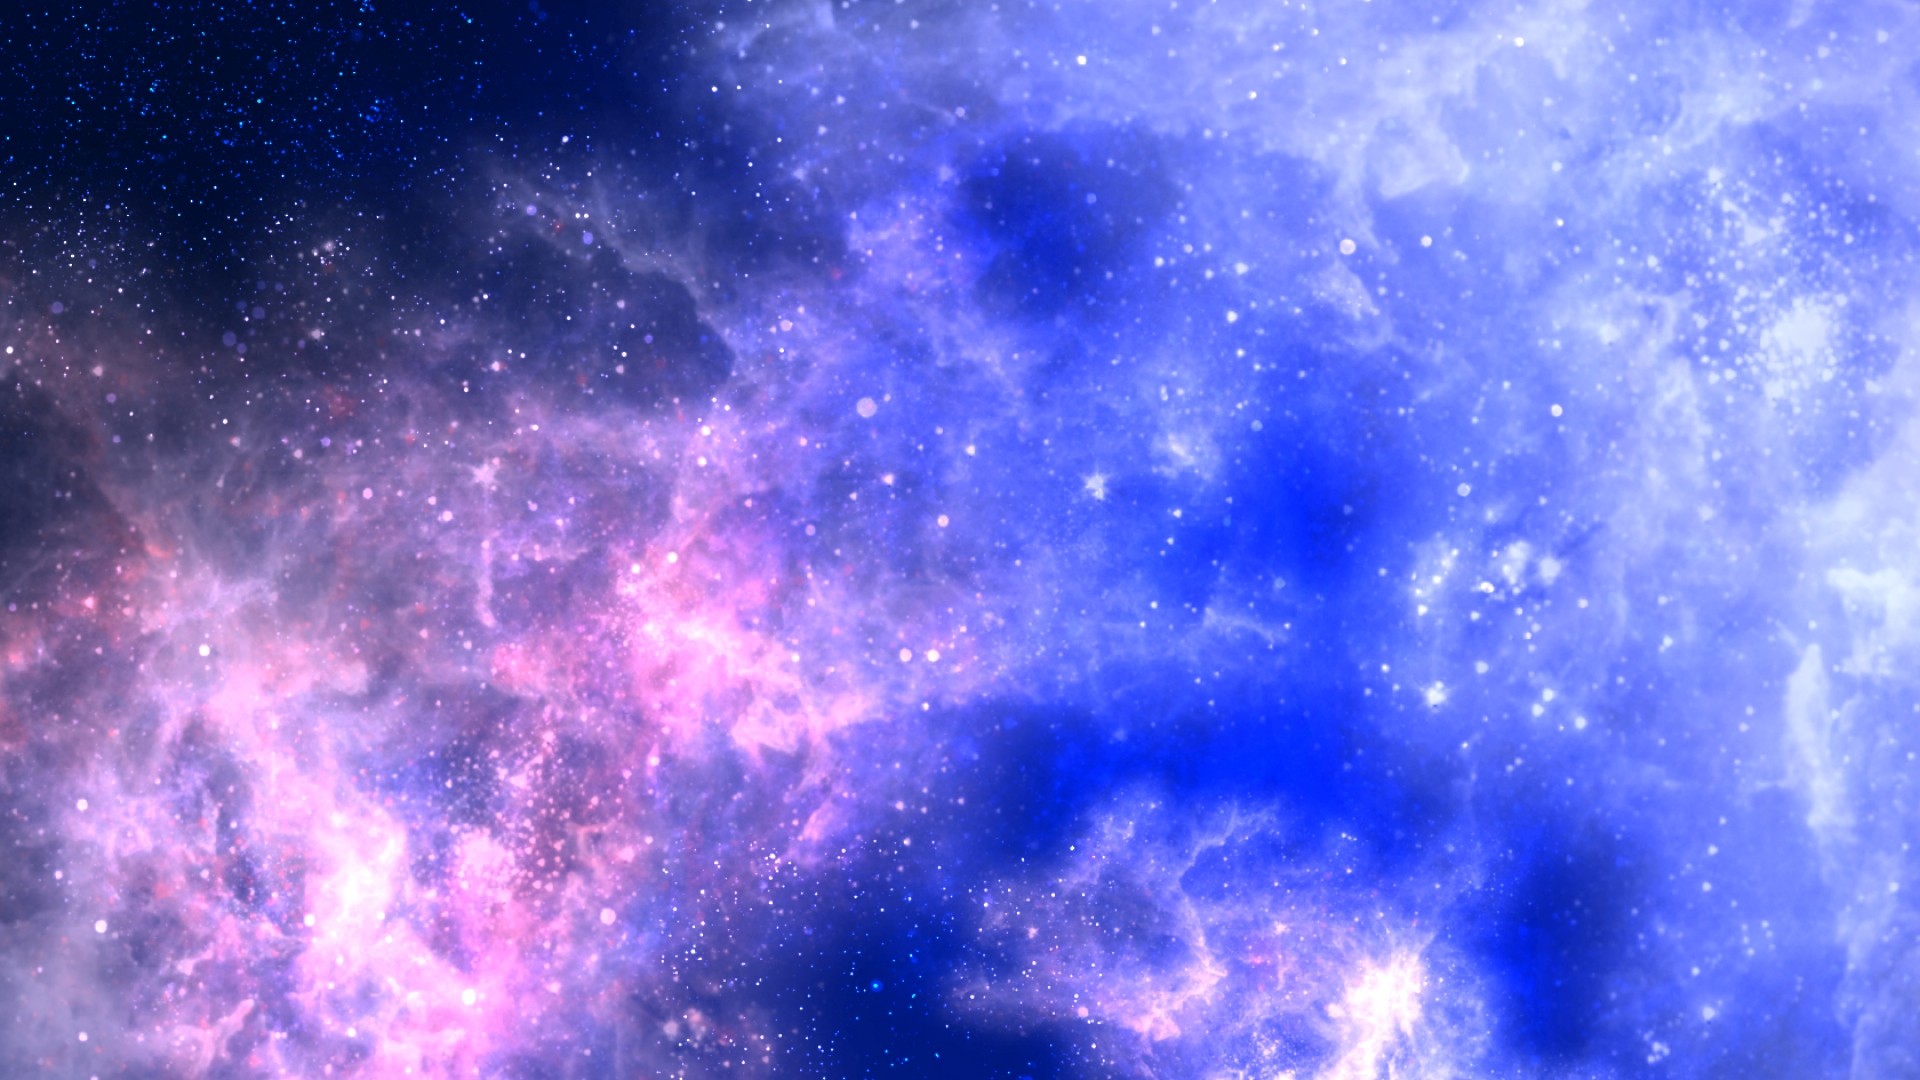 1920x1080 hd galaxy wallpaper - Google Search | Space | Pinterest | Hd galaxy  wallpaper and Blue galaxy wallpaper